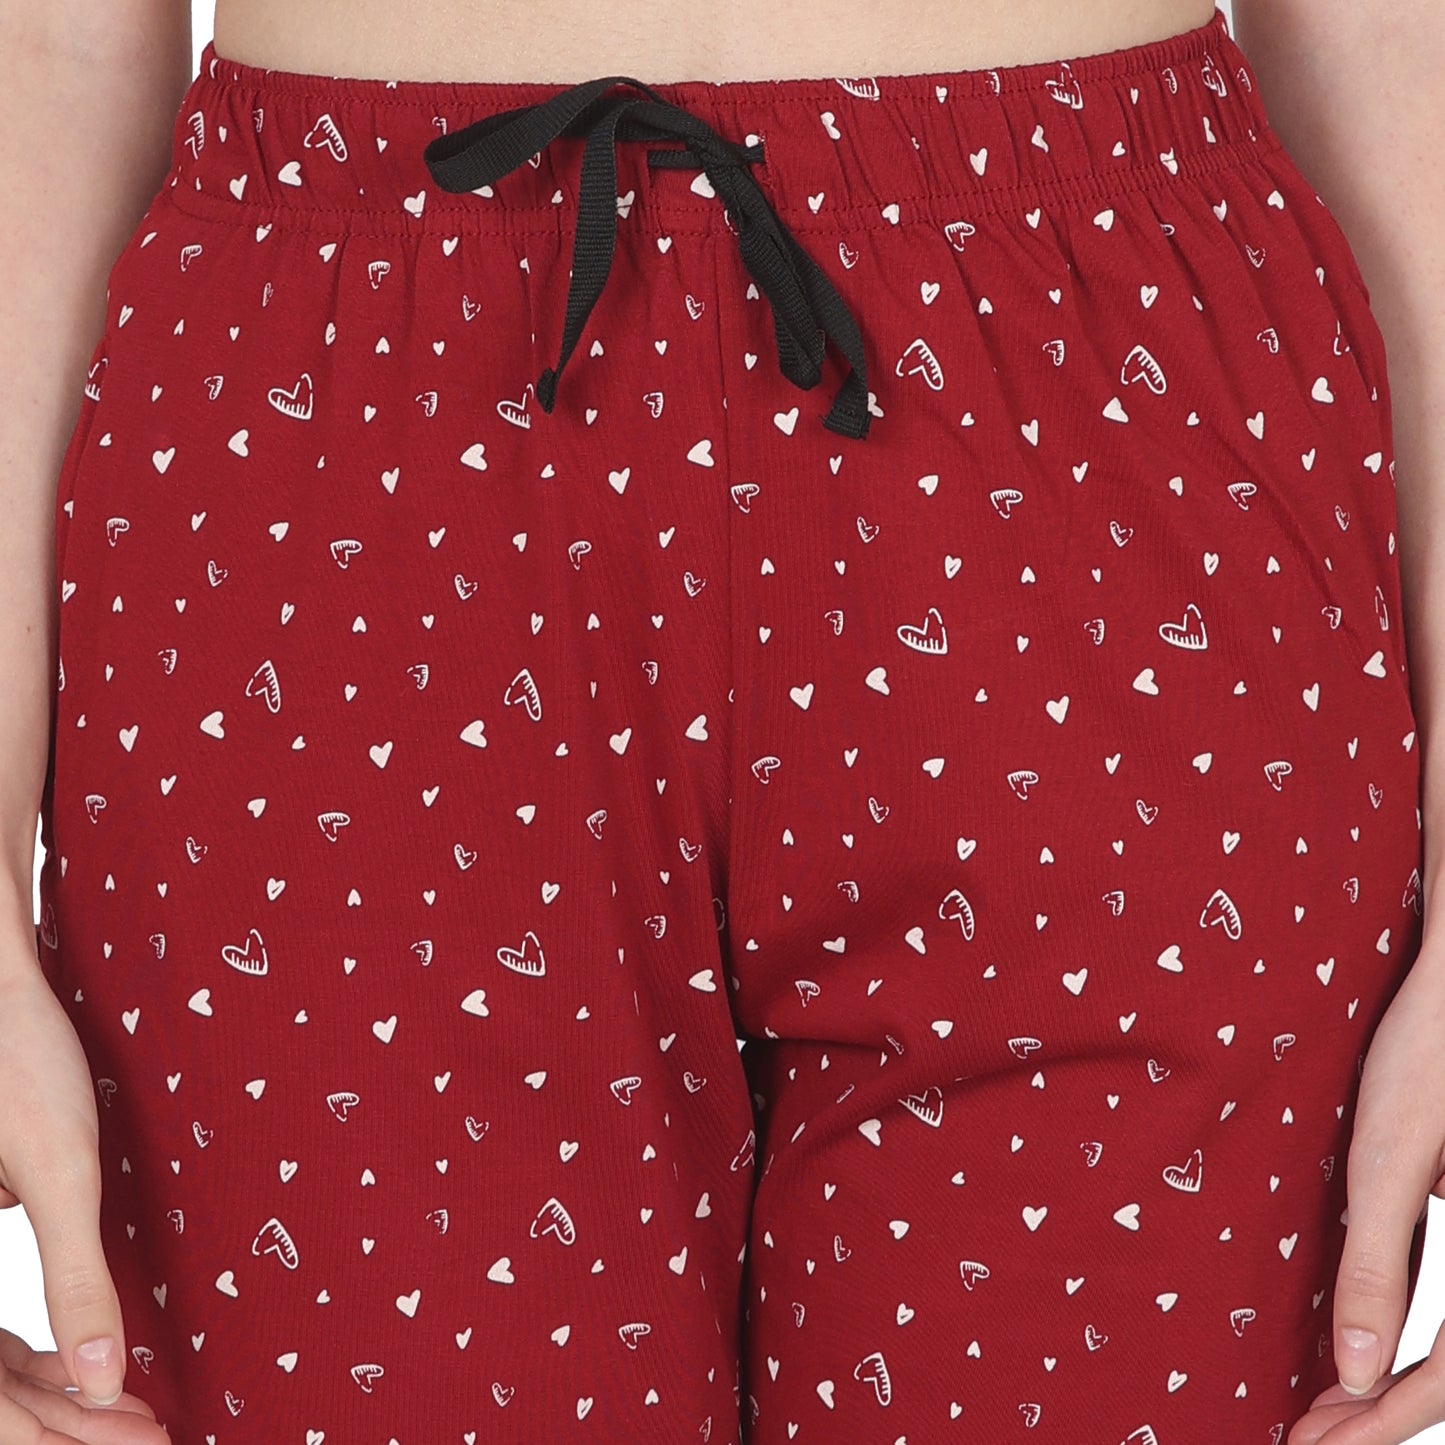 Eazy Women's Printed Capri Pants- Pack of 4 - Black, Blush, Cherry Red & Navy Blue